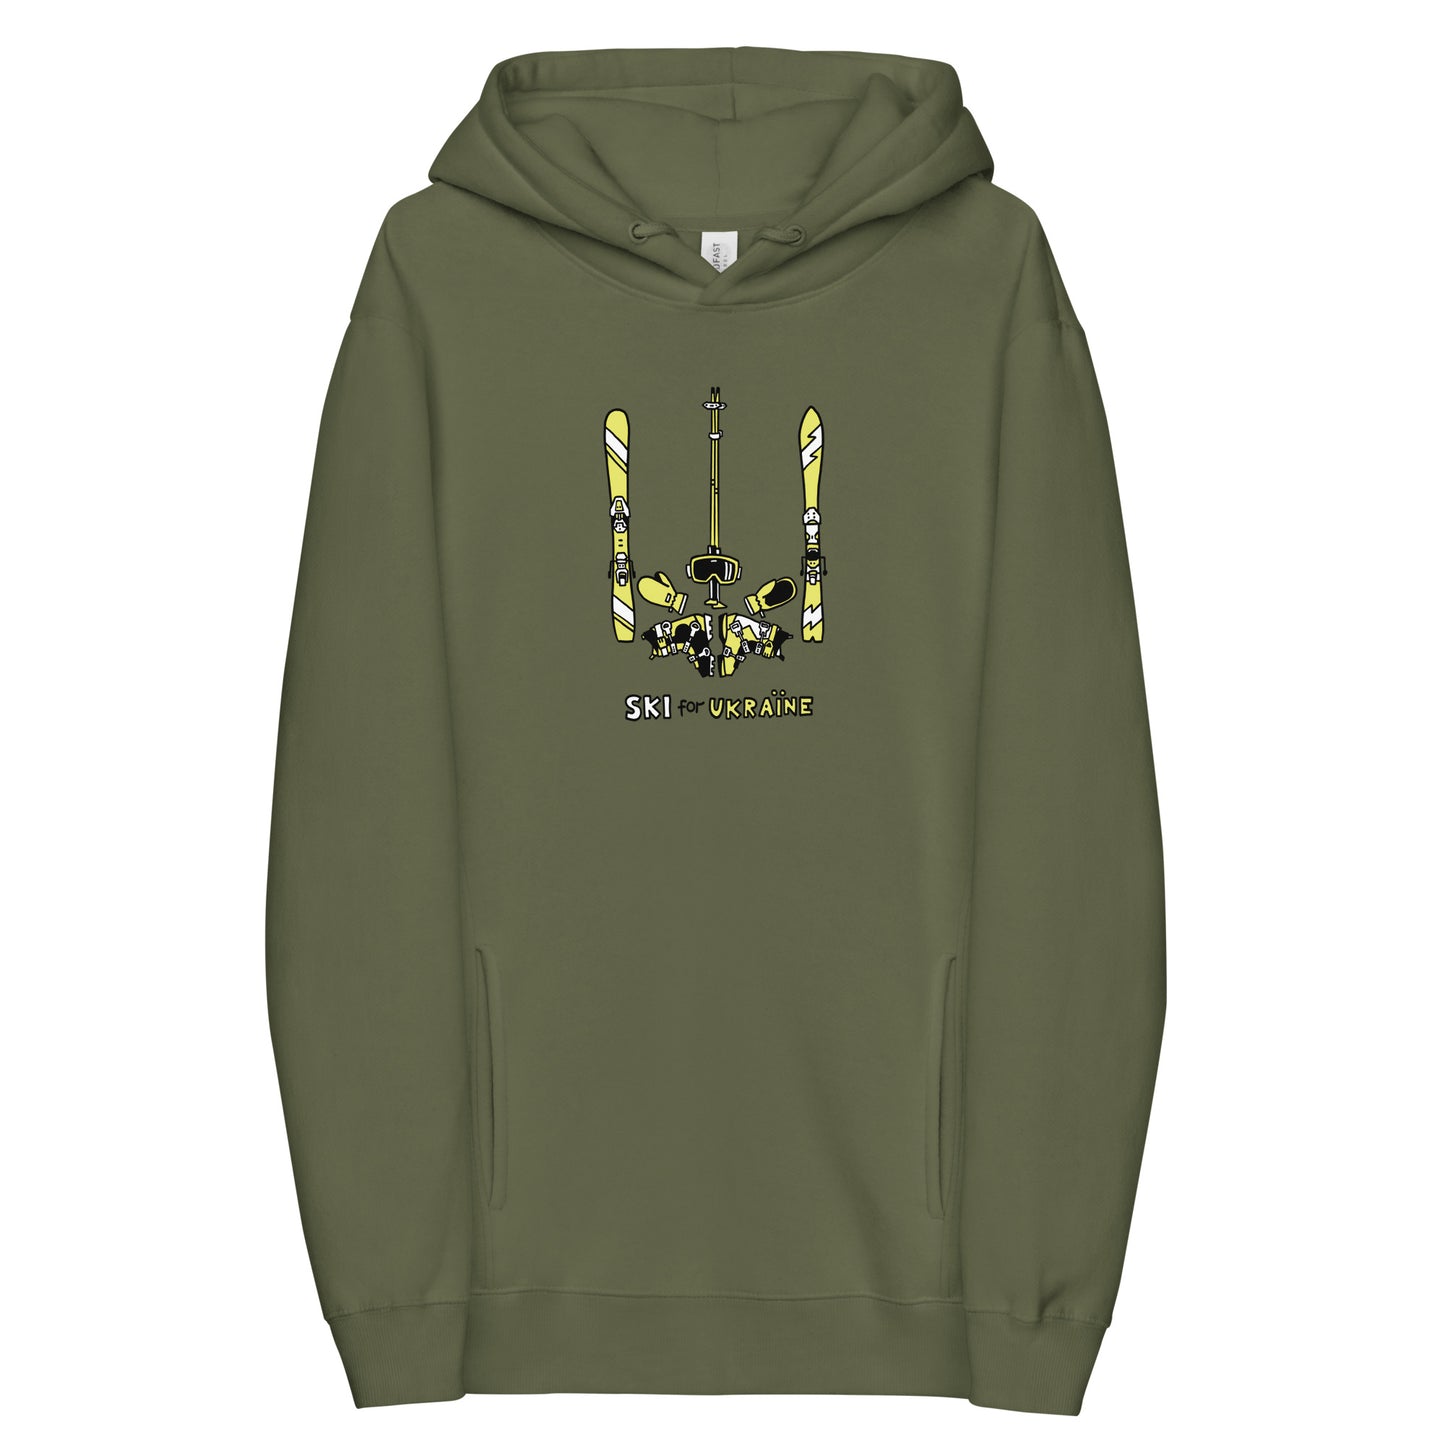 SKI for Ukraine - Unisex fashion hoodie